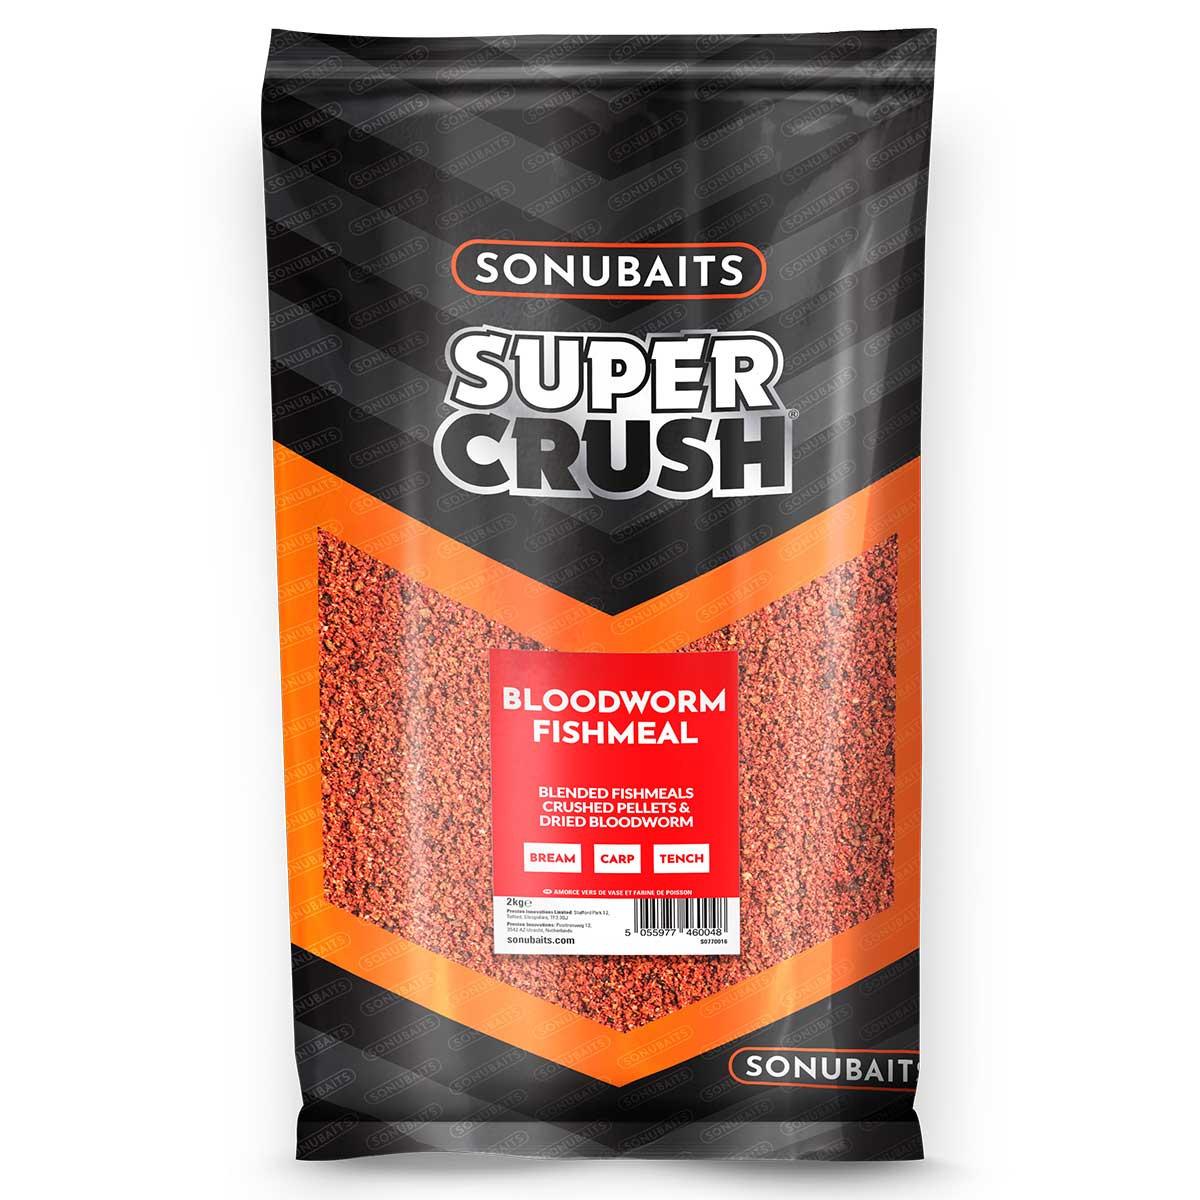 Sonubaits Super Crush Bloodworm